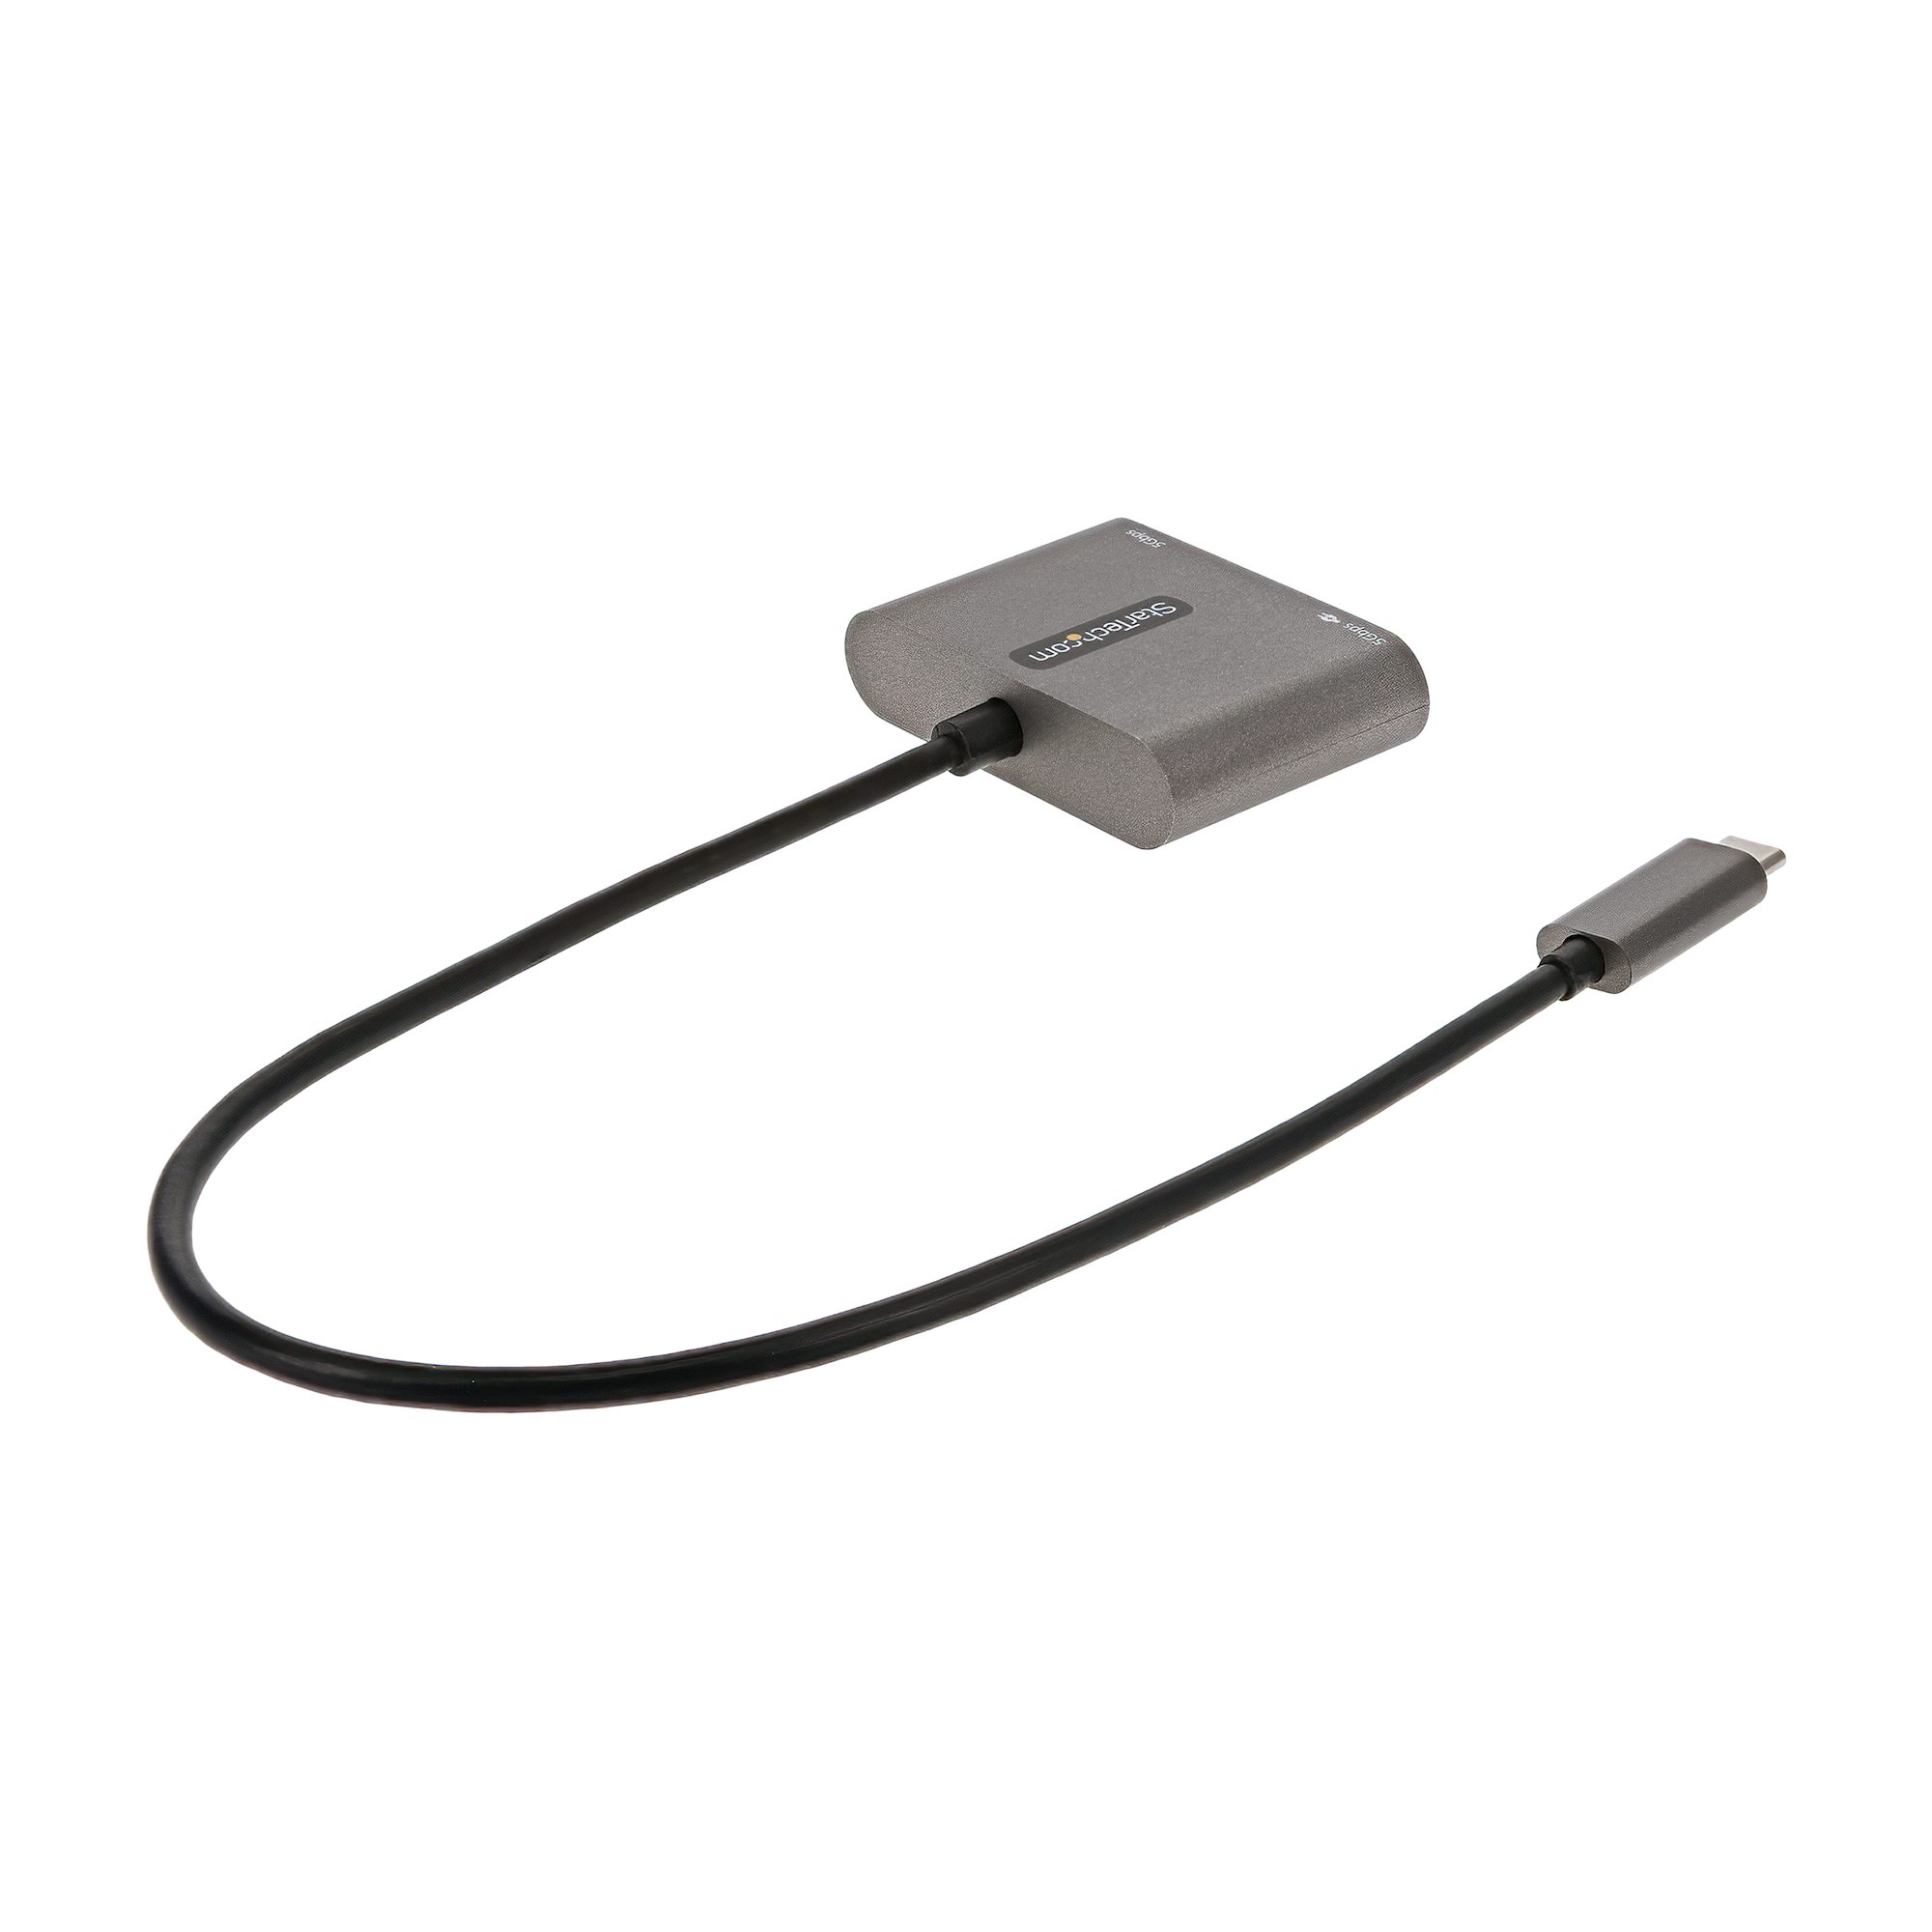 USB C Multiport Adapter - USB-C Mini Travel Dock w/ 4K HDMI or 1080p VGA -  3x USB 3.0 Hub, SD, GbE, Audio, 100W PD Pass-Through - Portable Docking